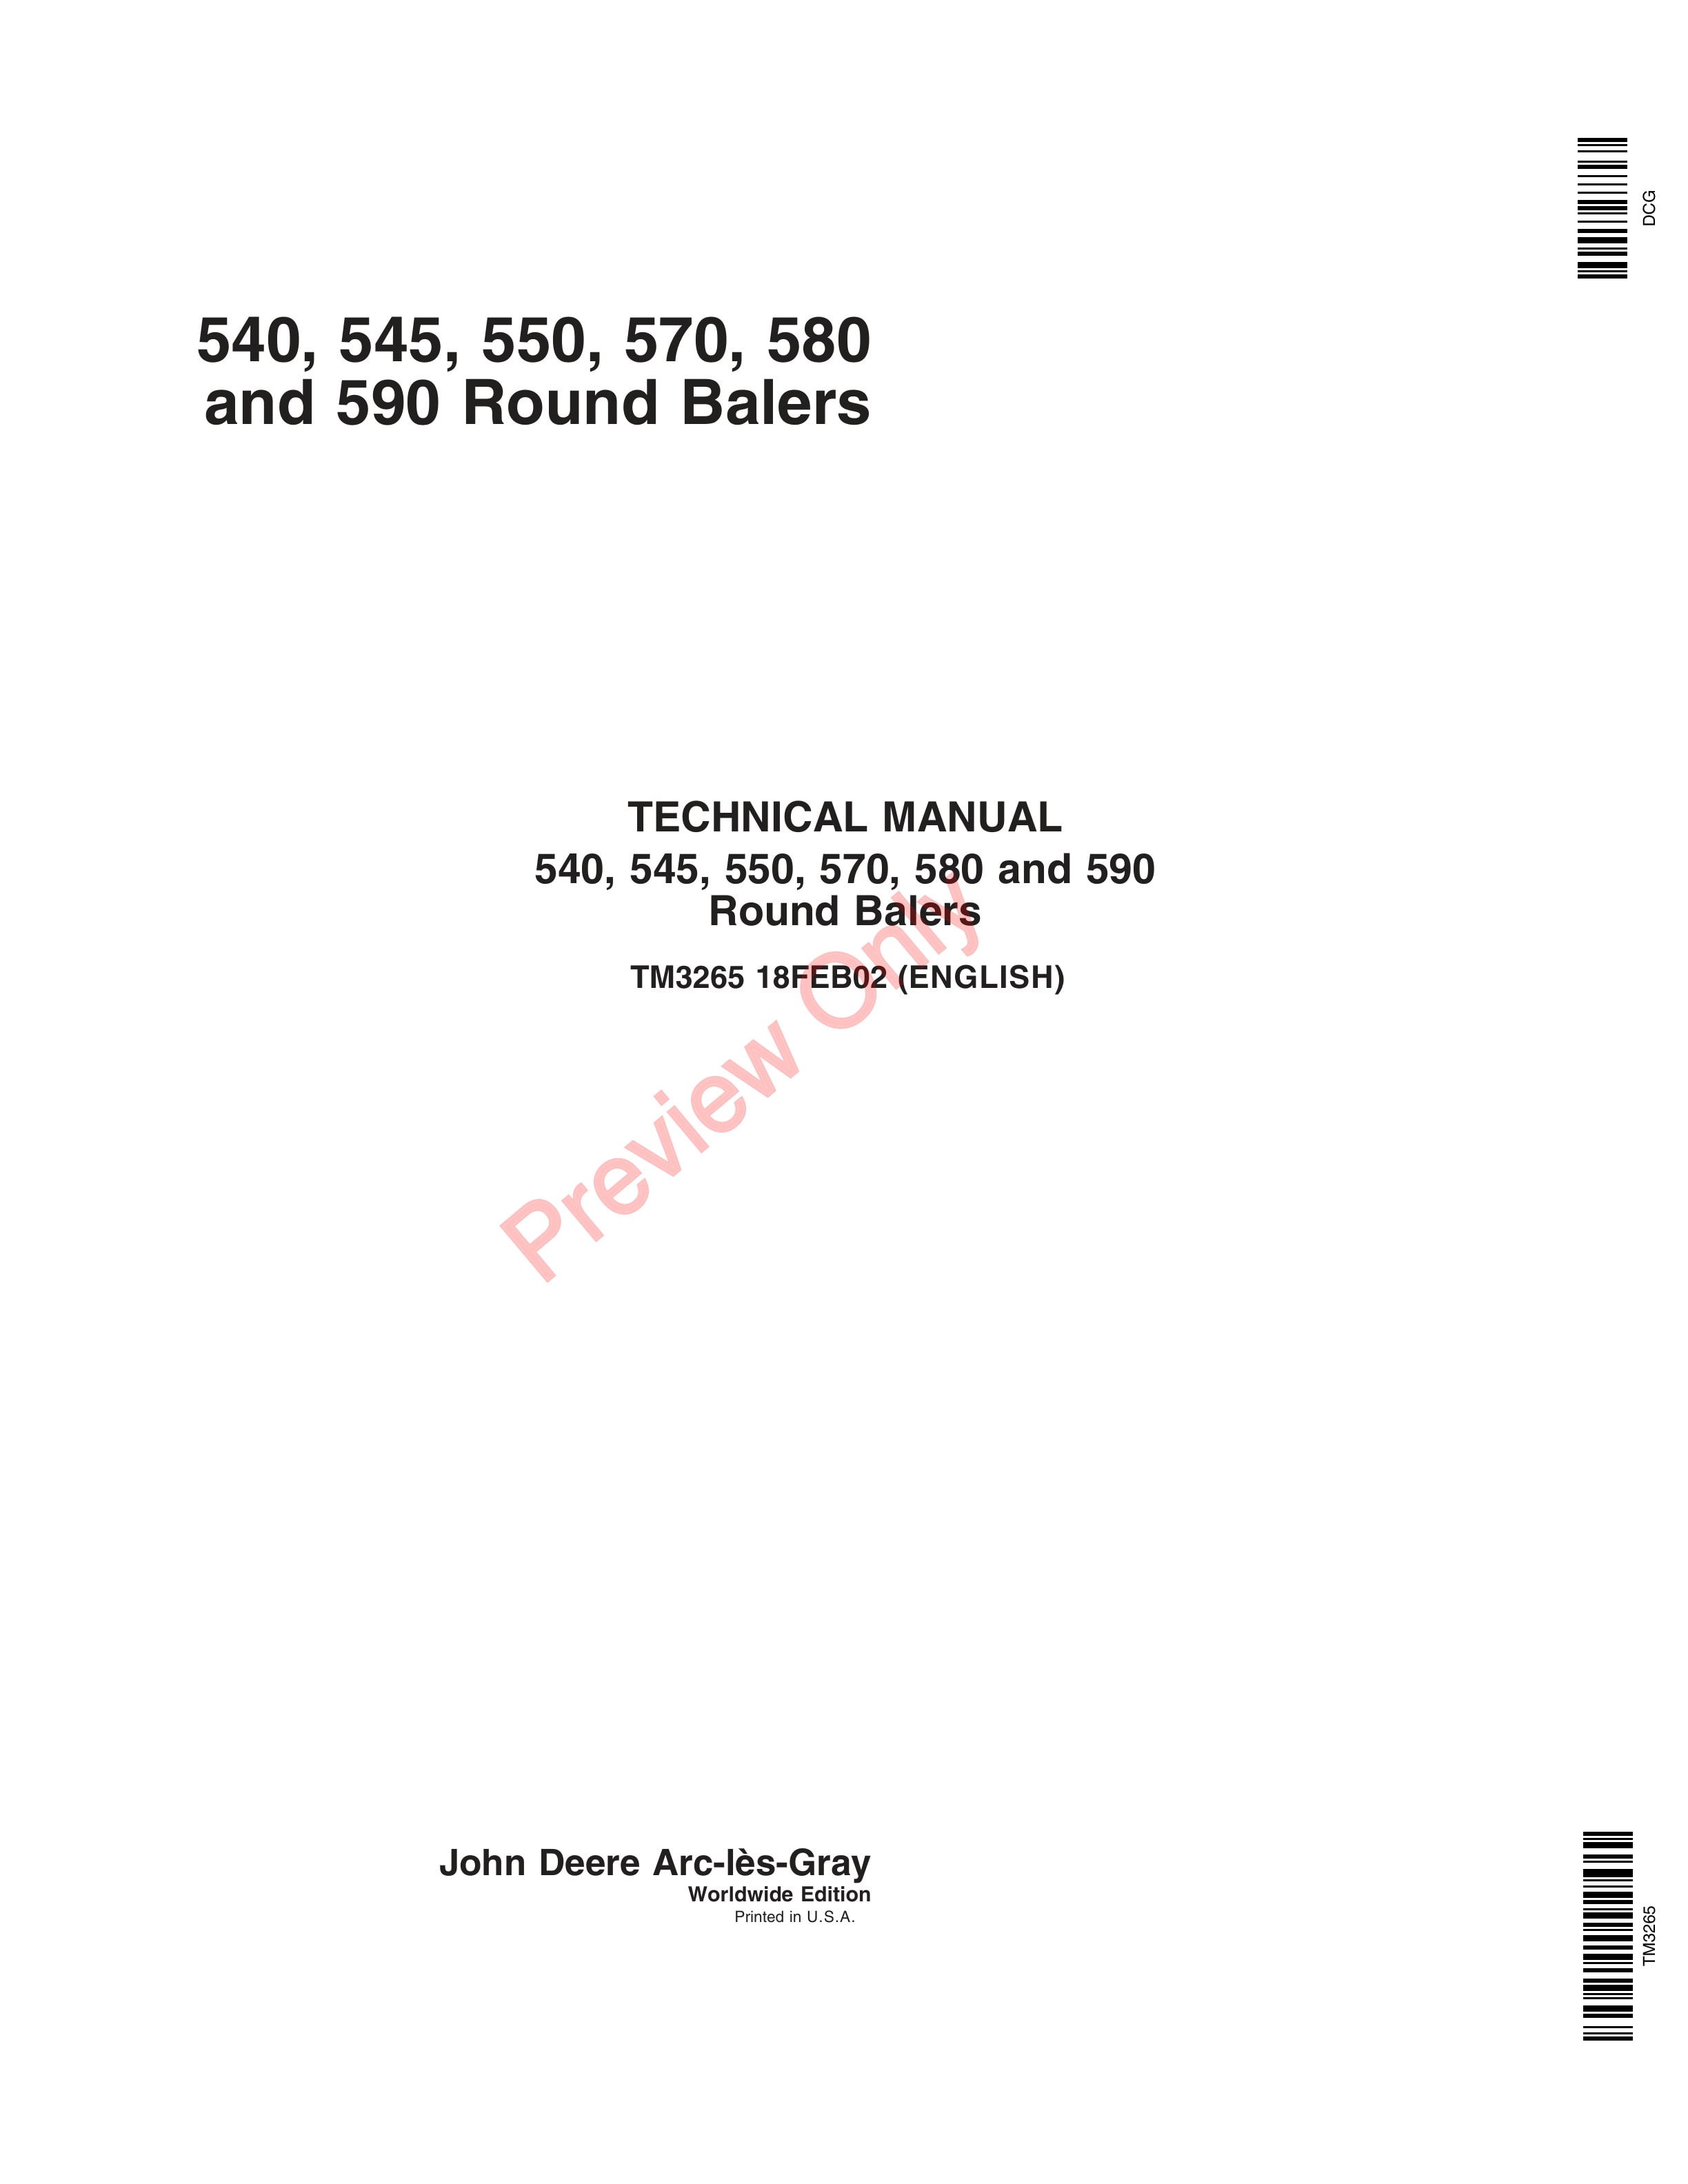 John Deere 540, 545, 550, 570, 580 and 590 Round Balers Technical Manual TM3265 18FEB02 PDF